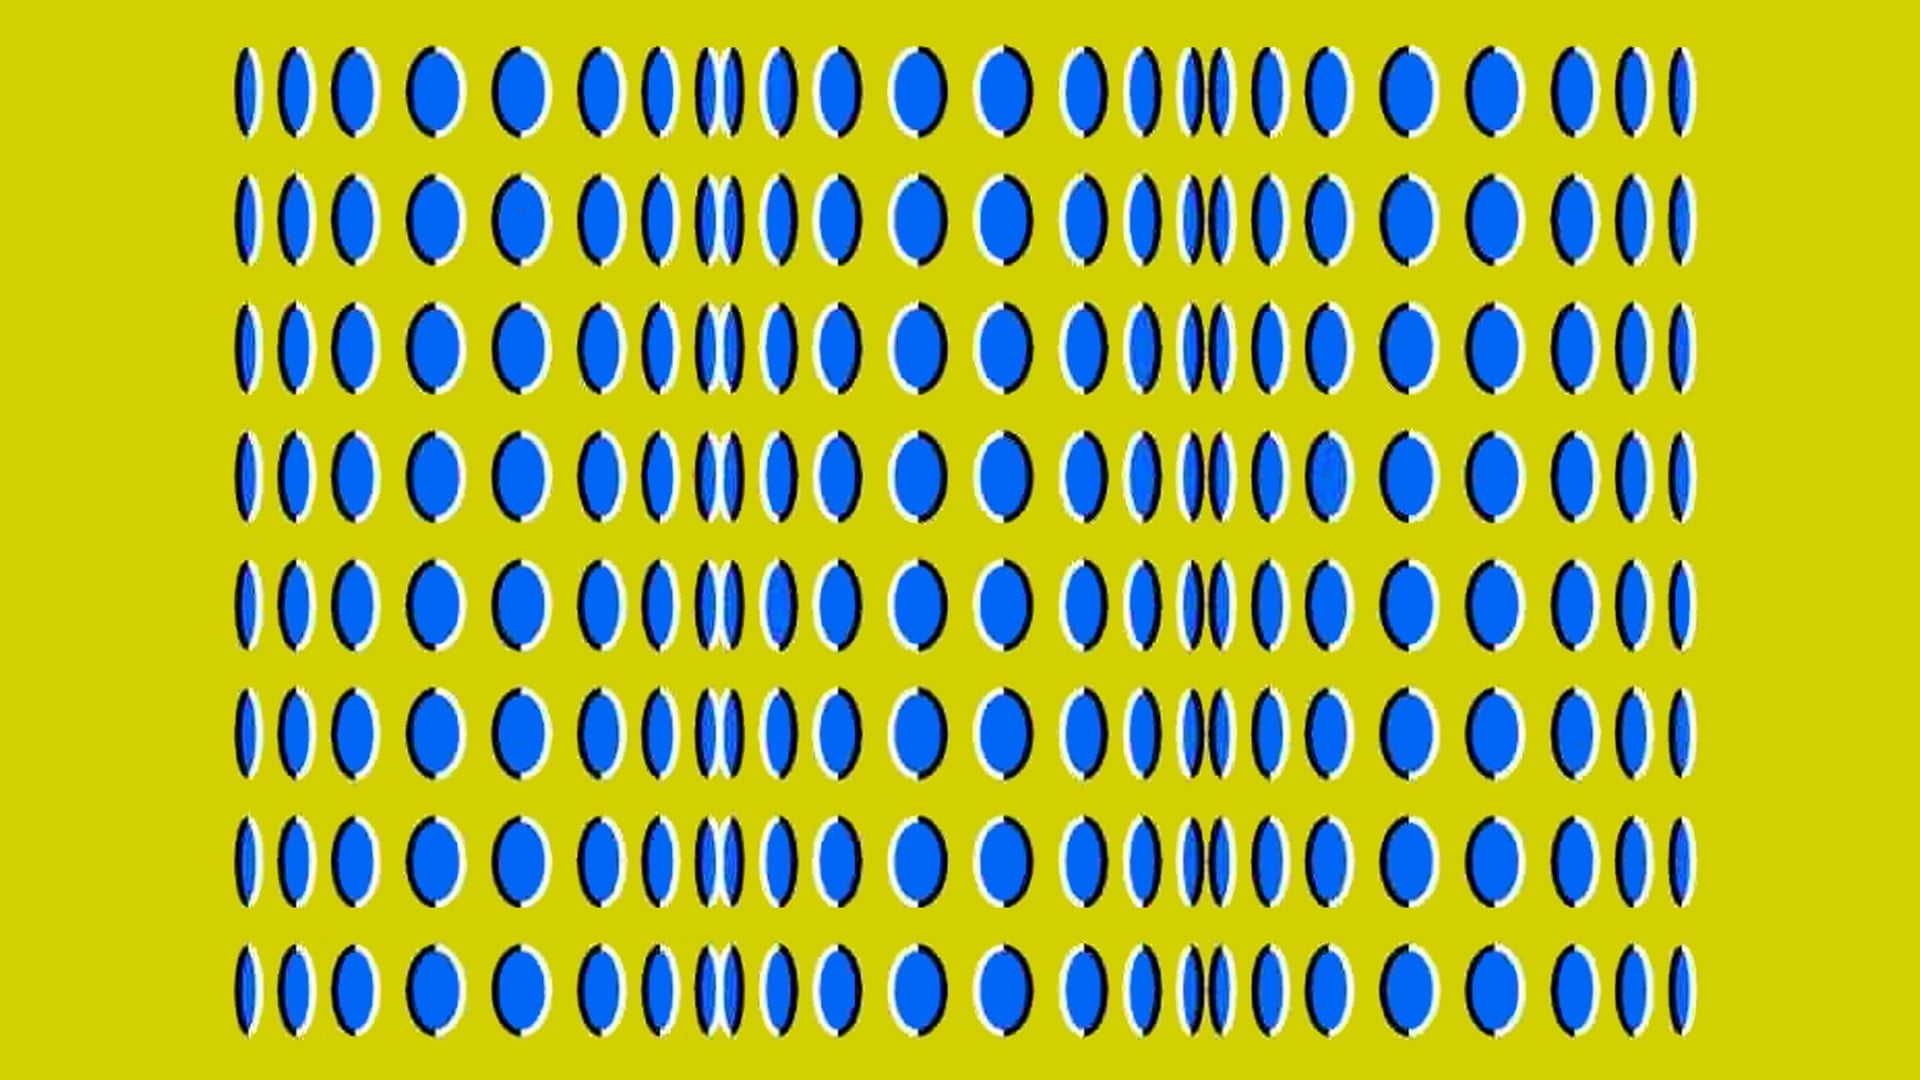 yellow and blue optical illusion illustration